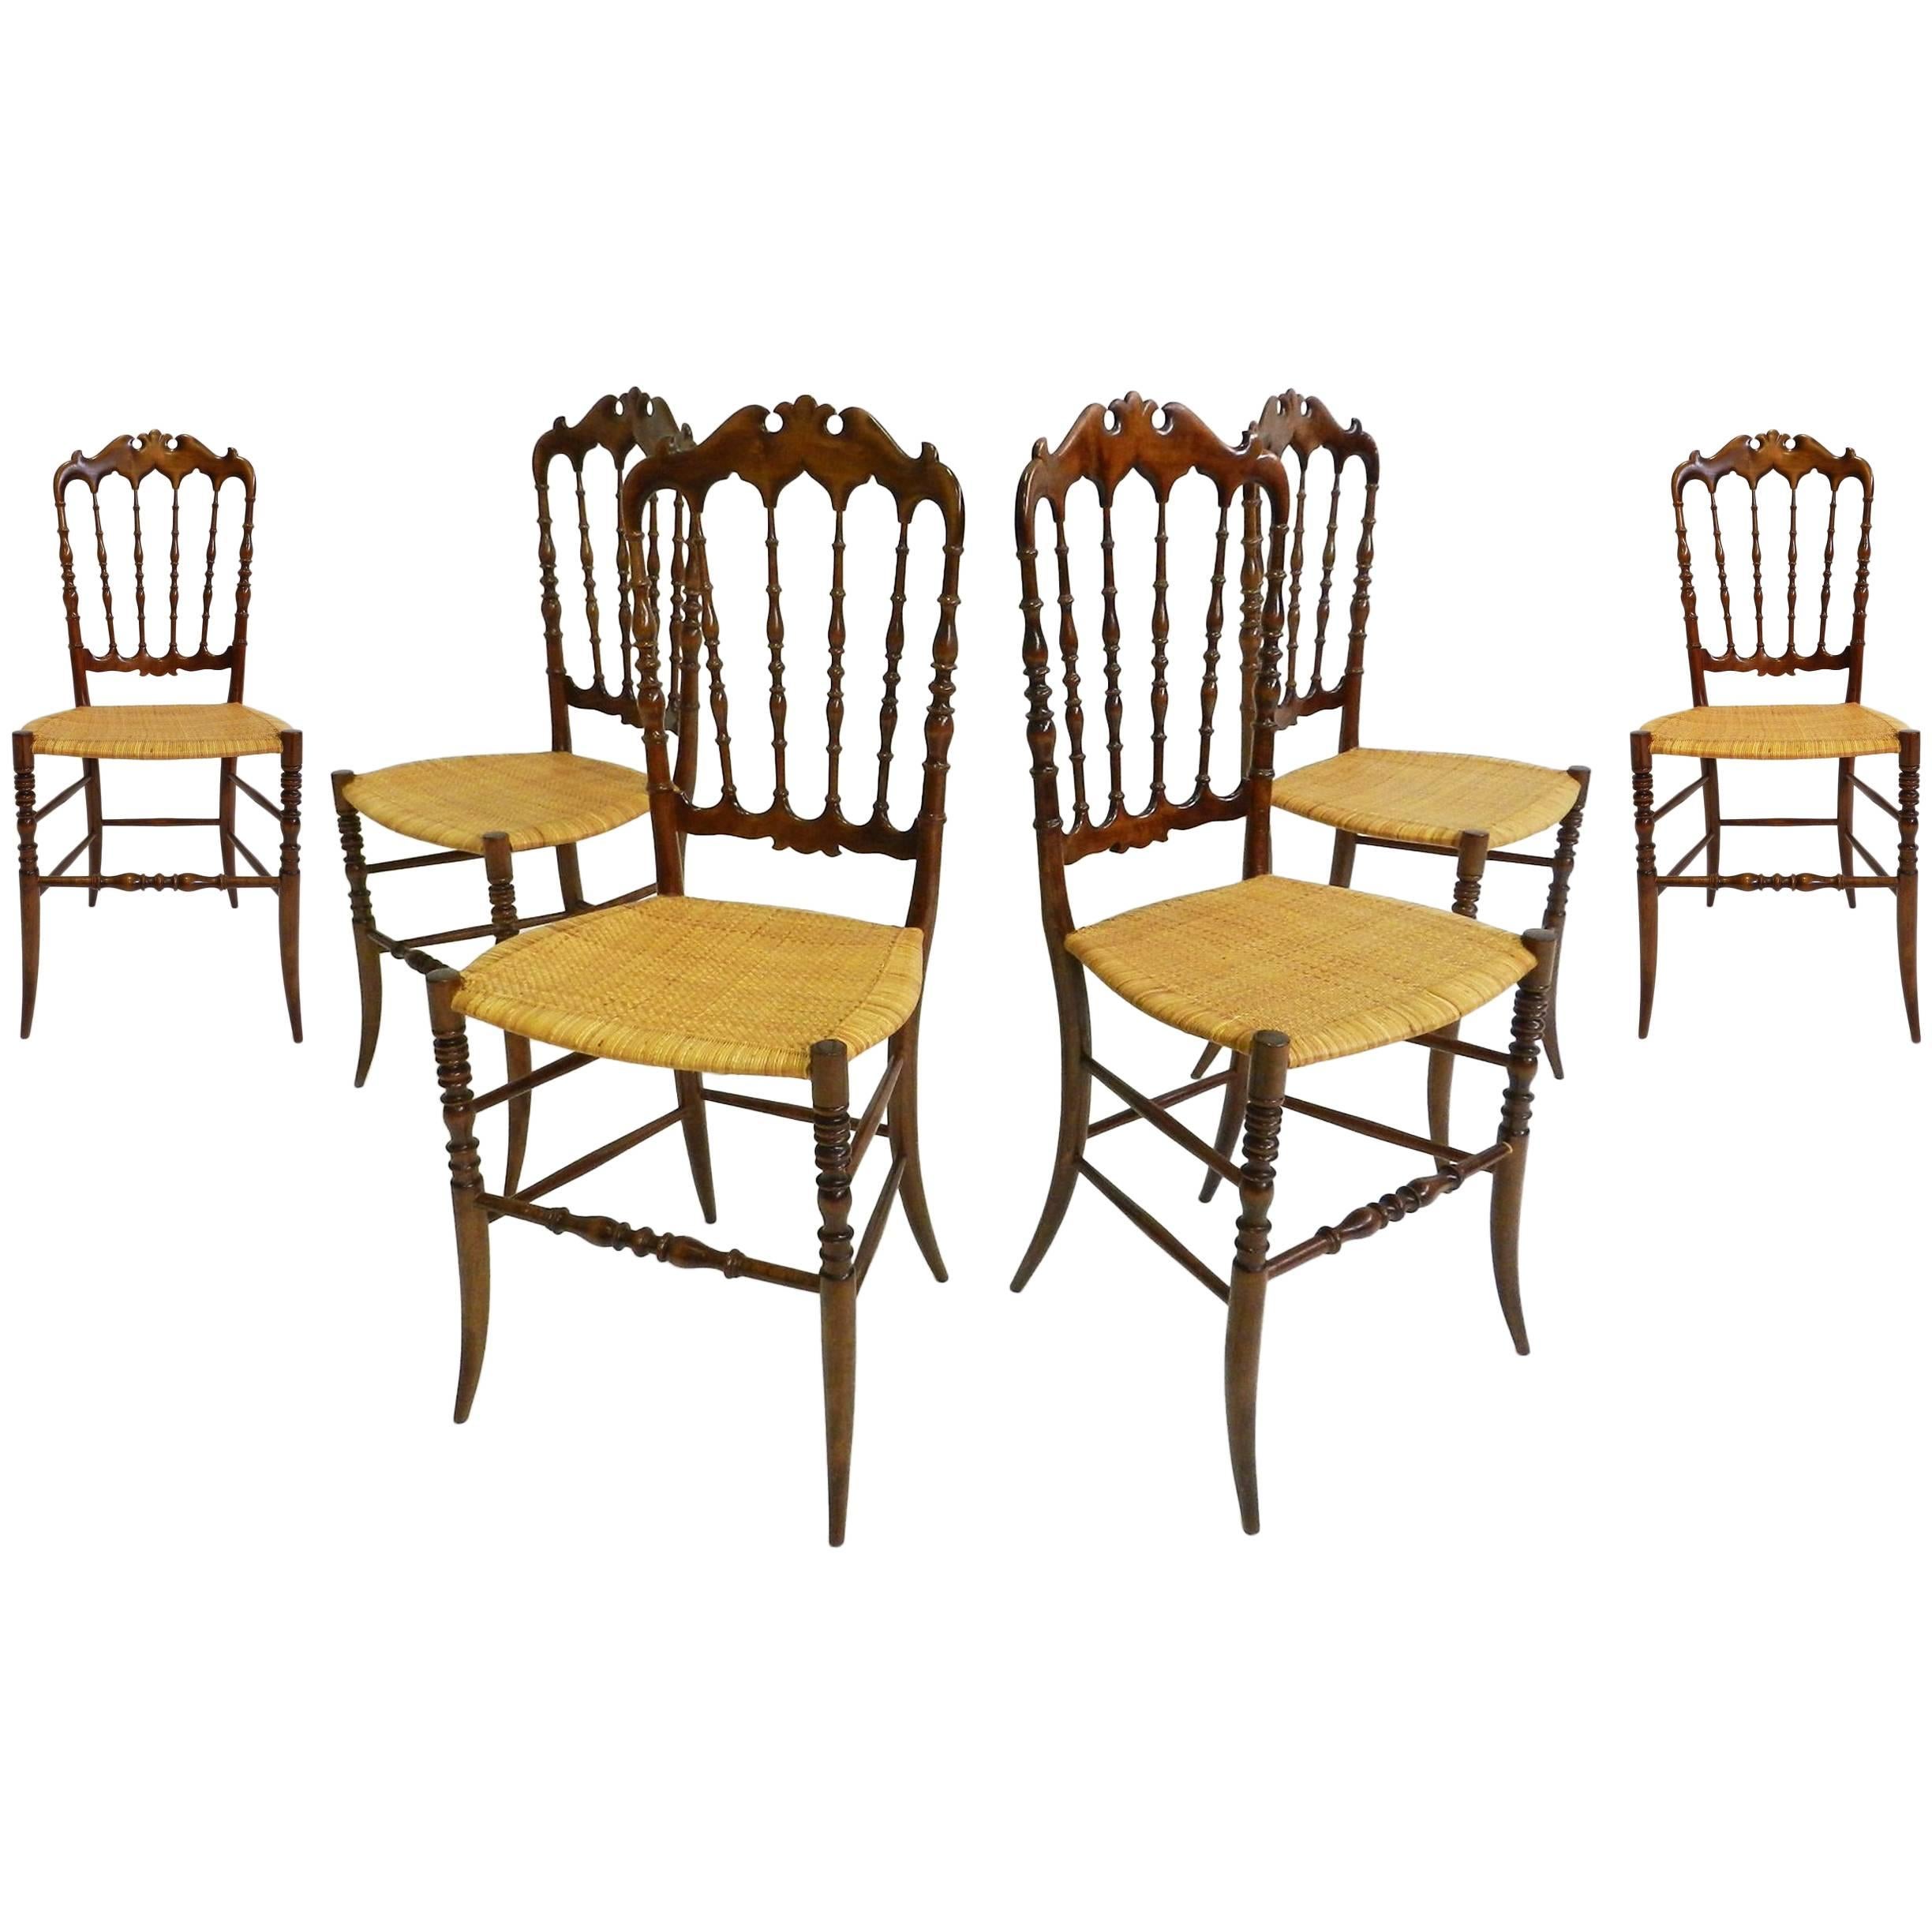 Six Elegant Chairs Model Chiavarina